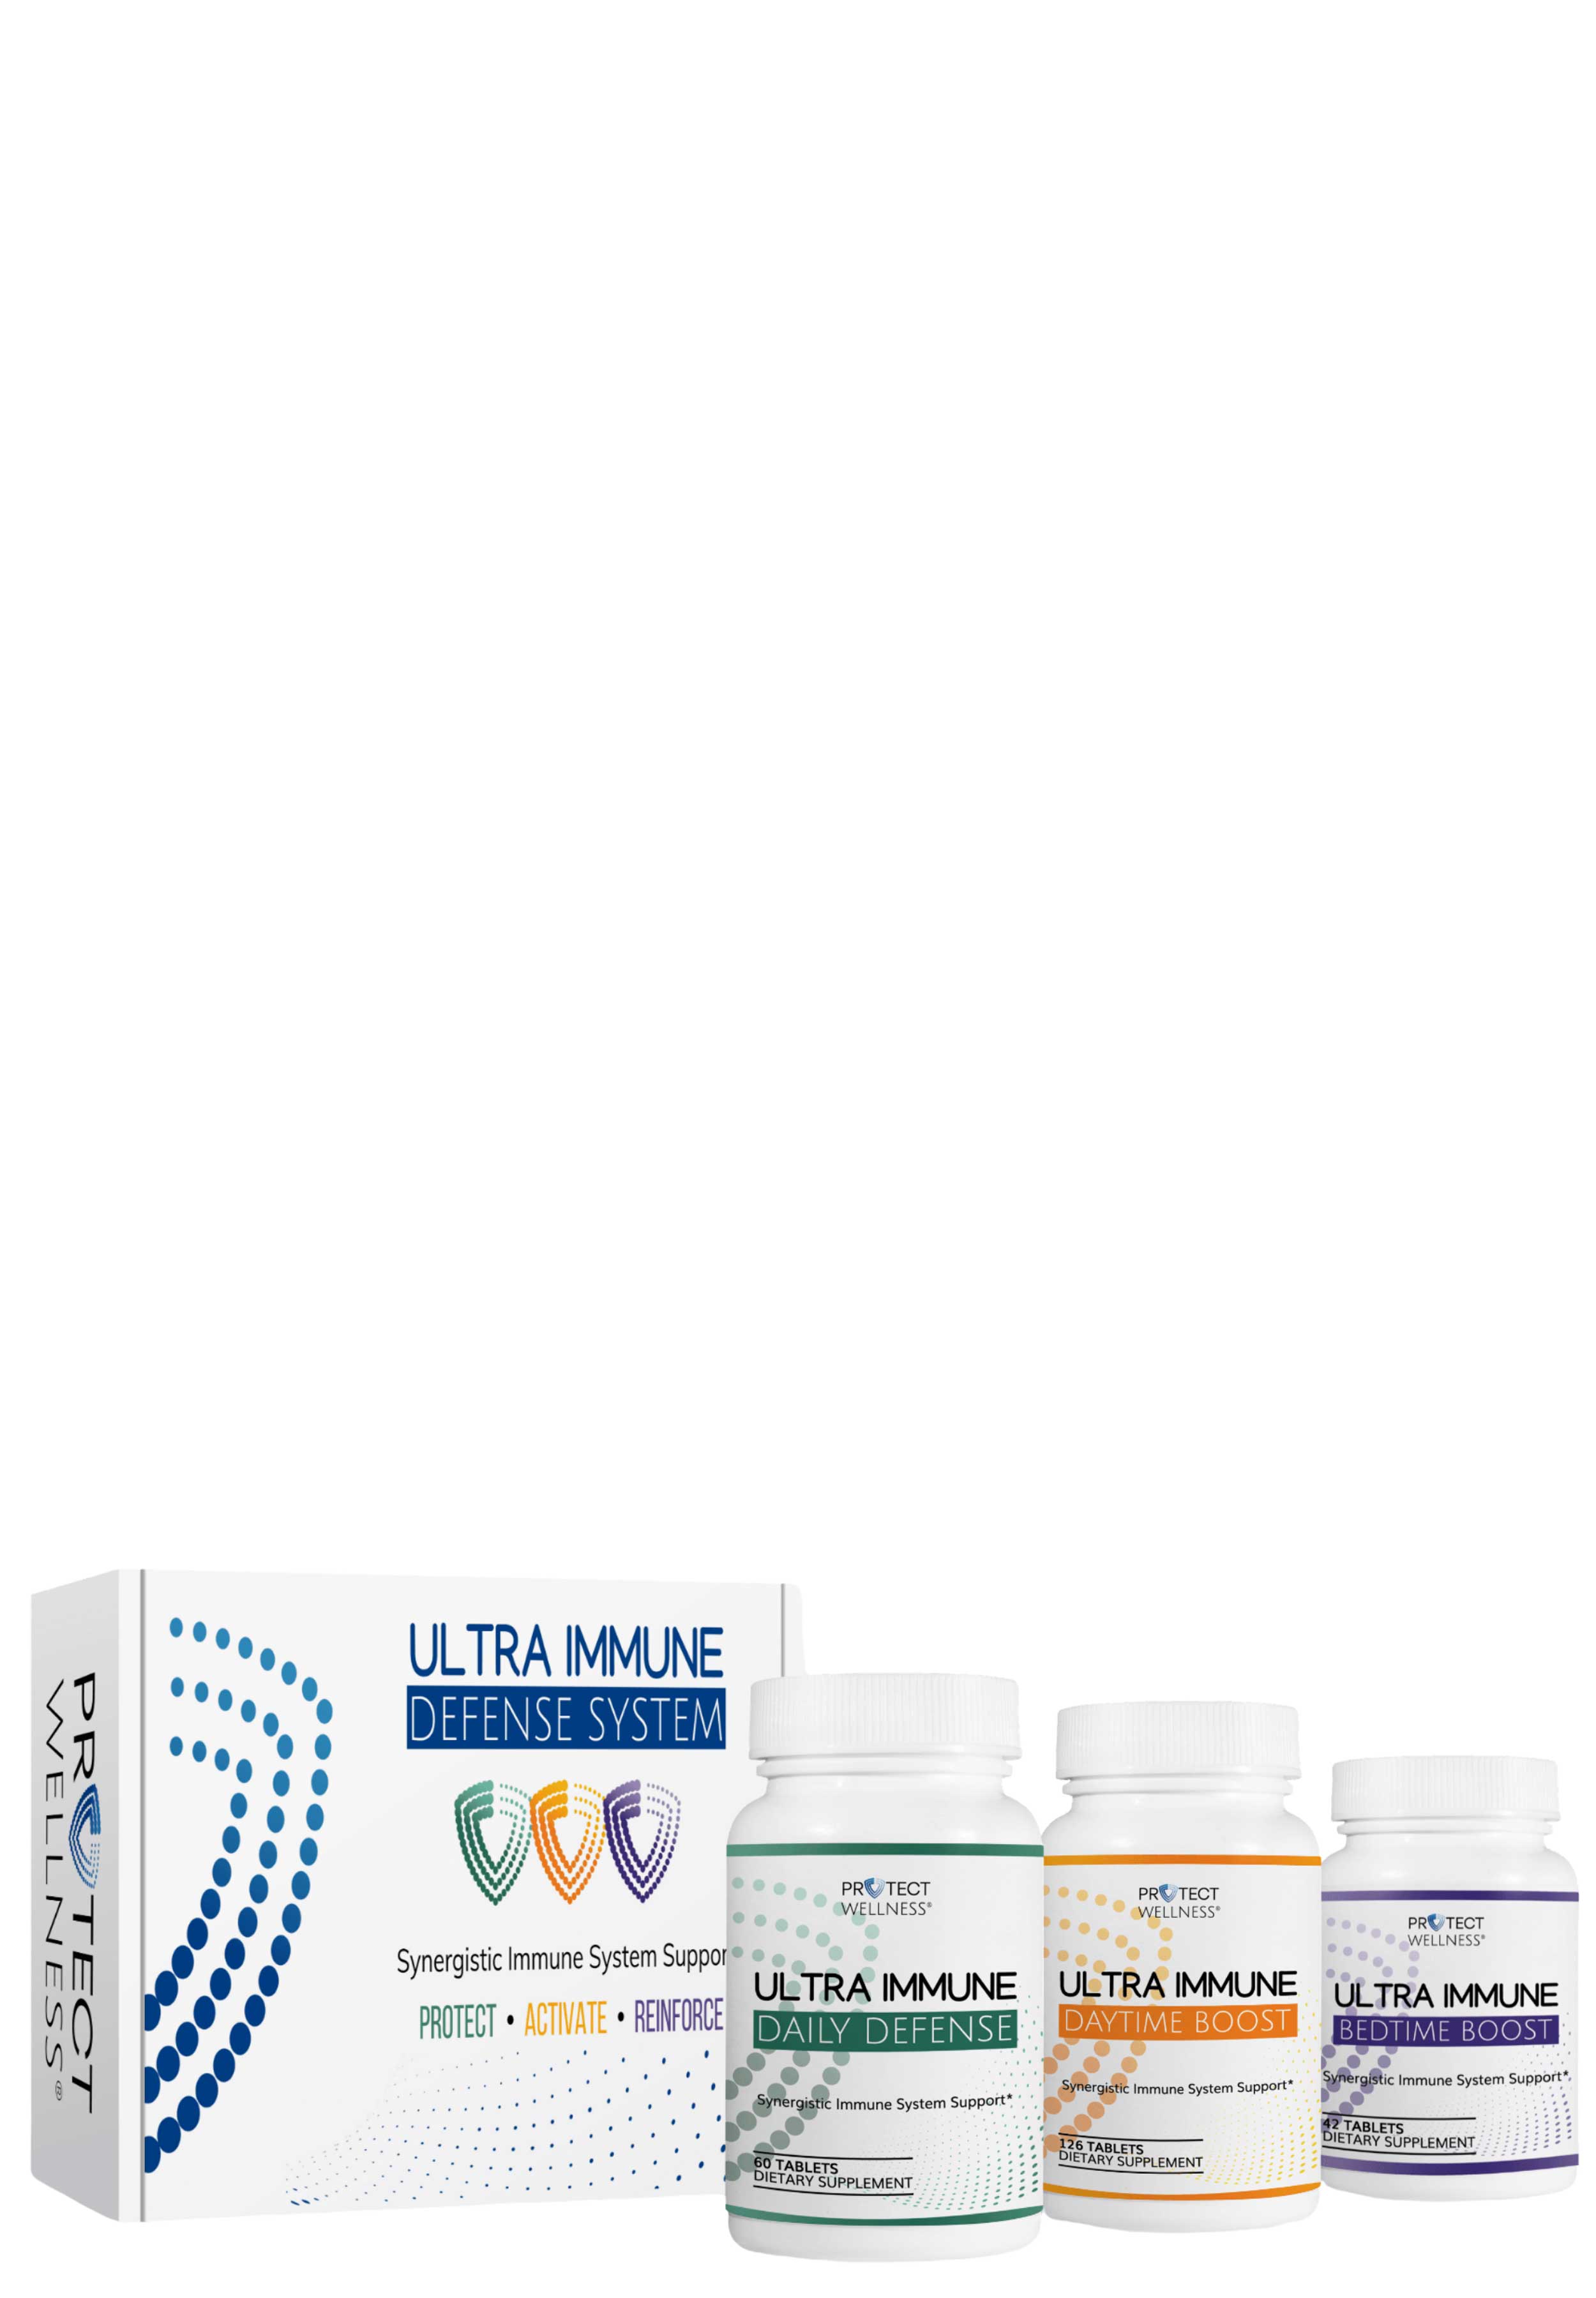 Protect Wellness Ultra Immune Defense System Kit